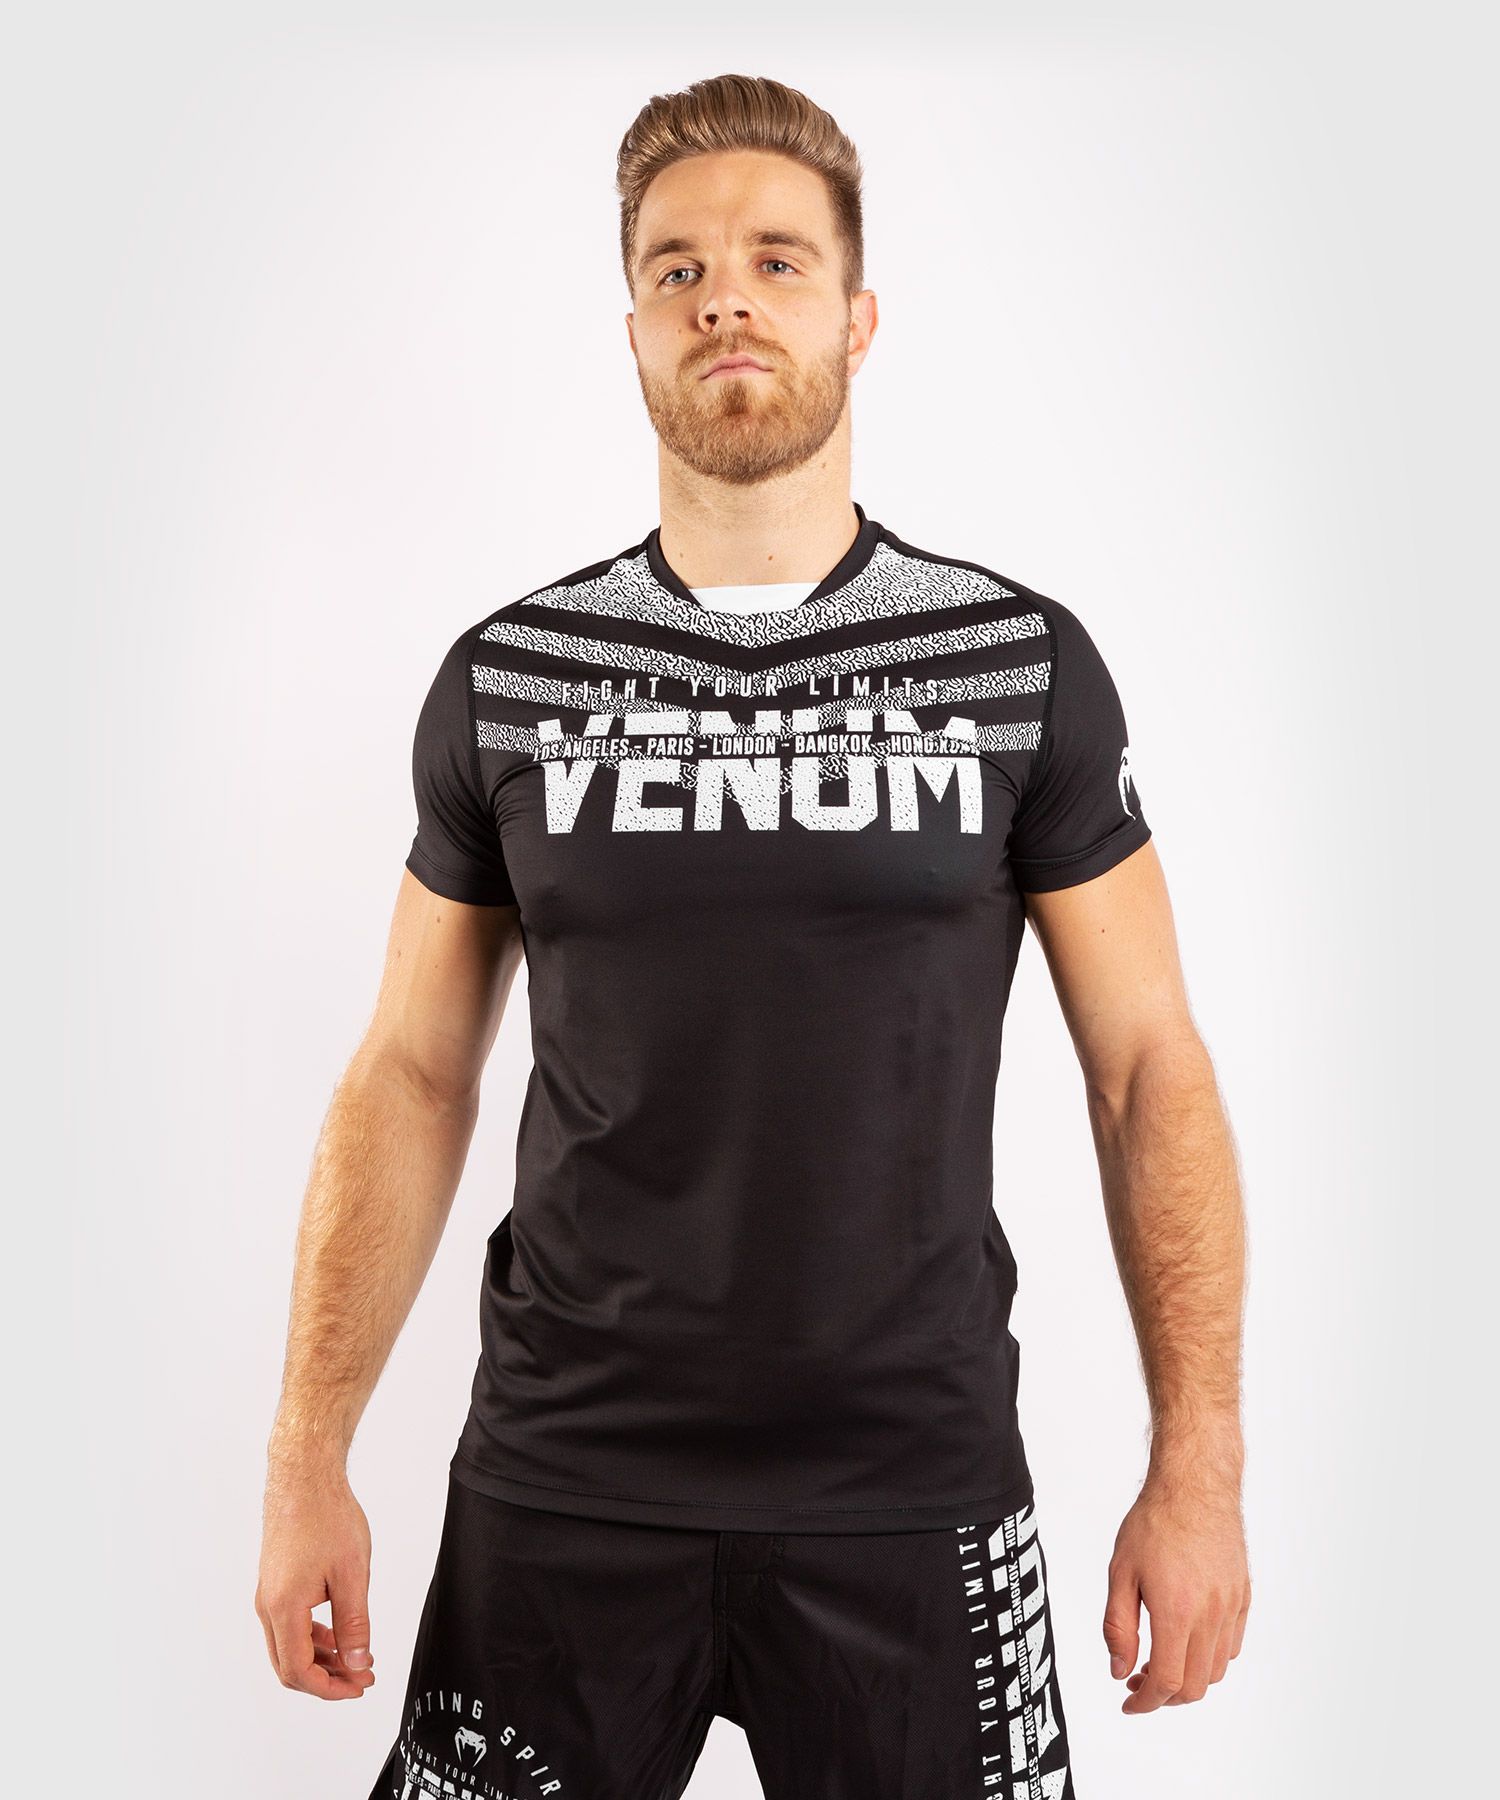 Venum Signature Dry Tech T-shirt - Black/White